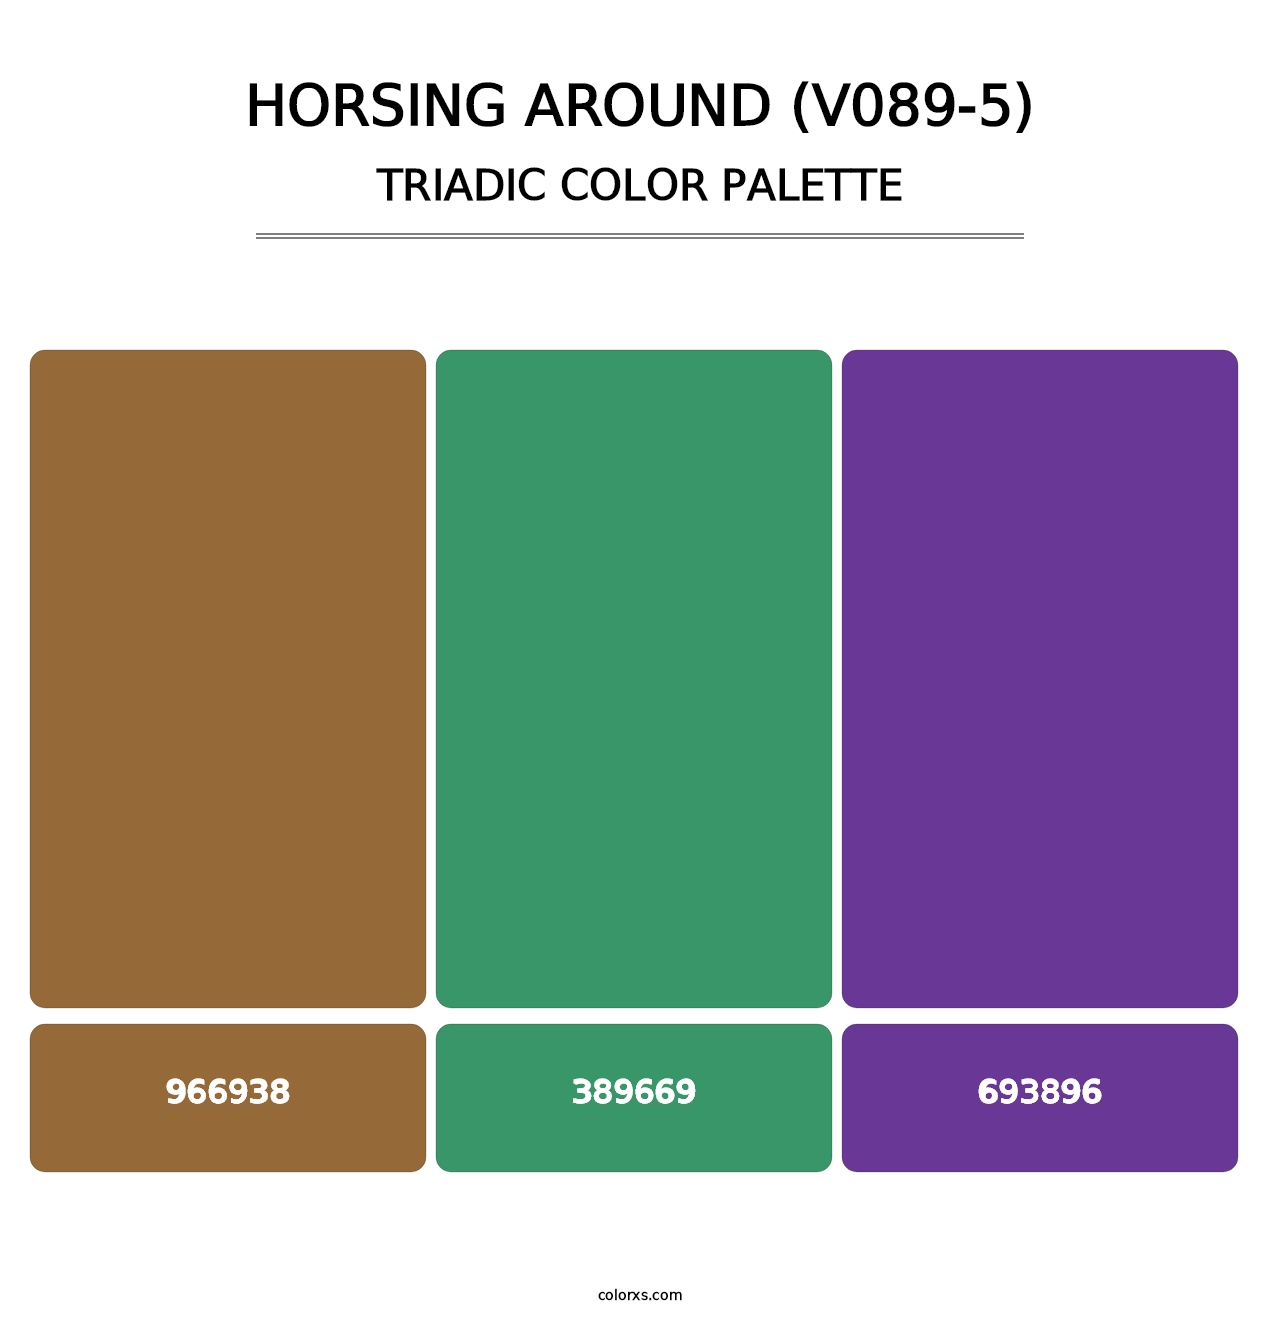 Horsing Around (V089-5) - Triadic Color Palette